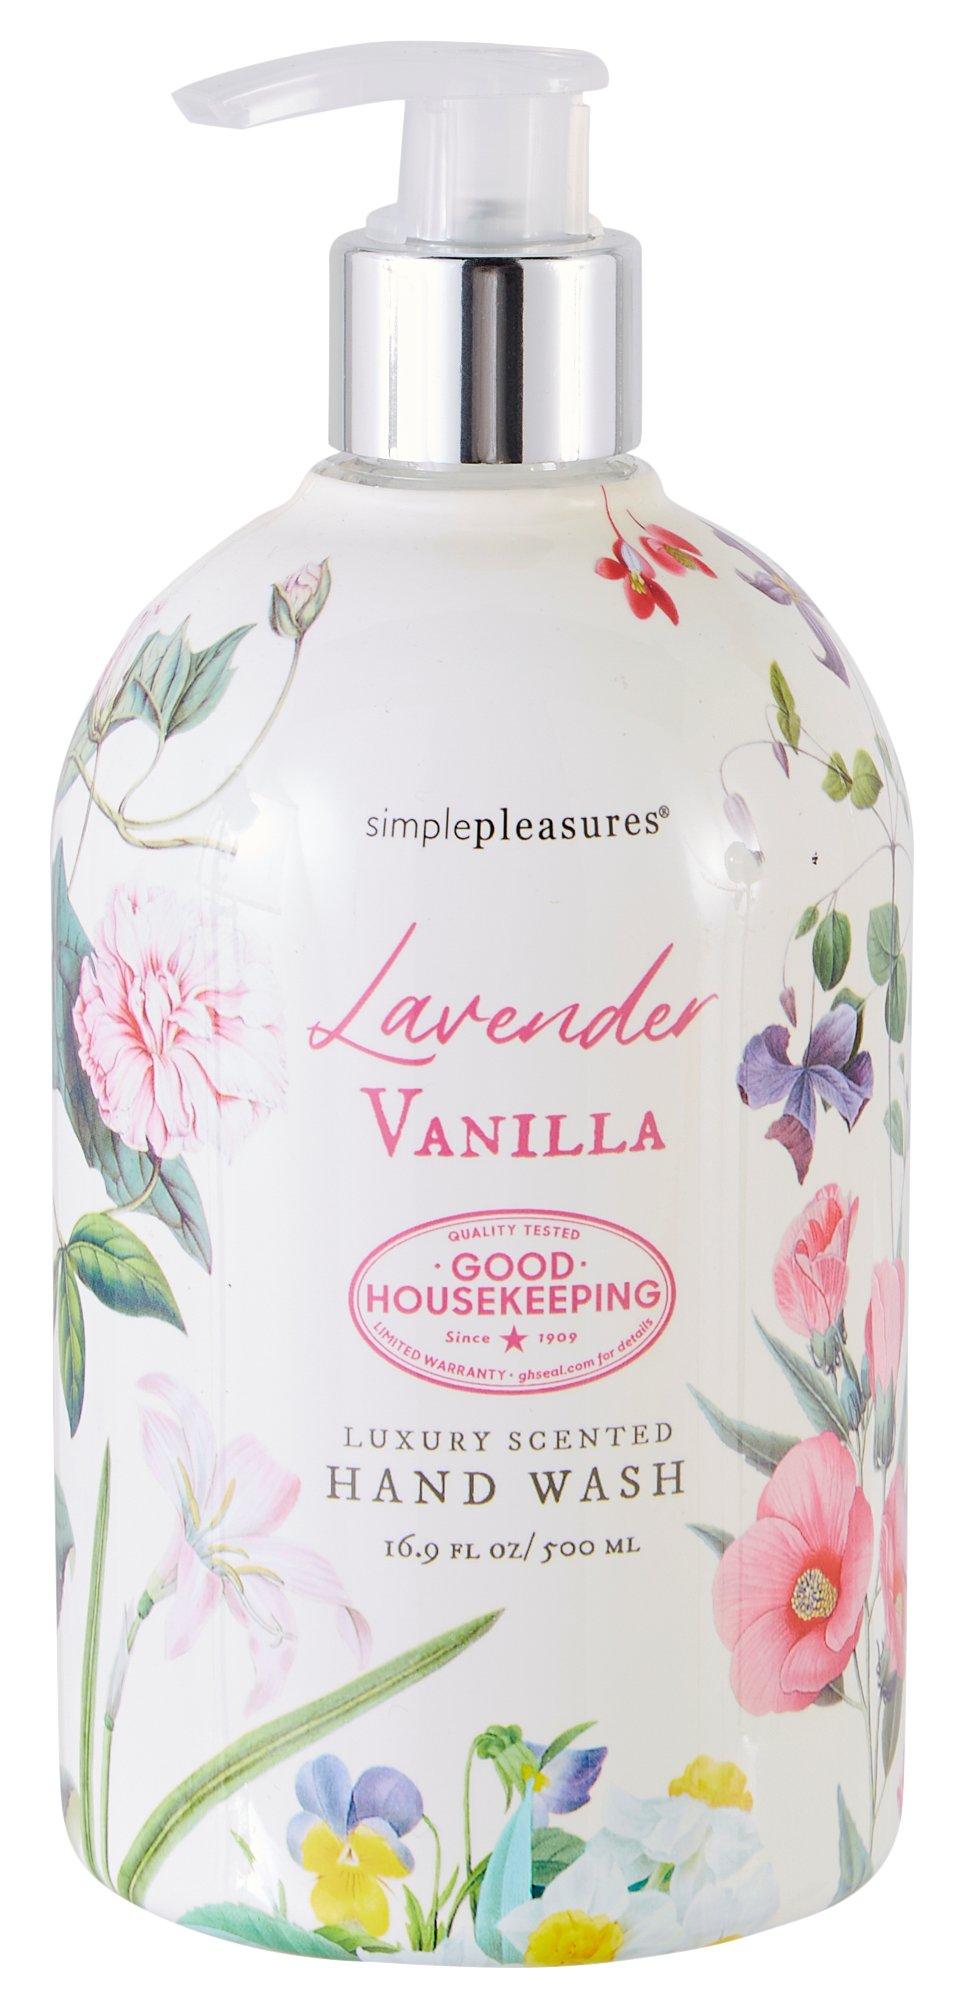 Simple Pleasures Lavender Vanilla Luxury Scented Hand Wash